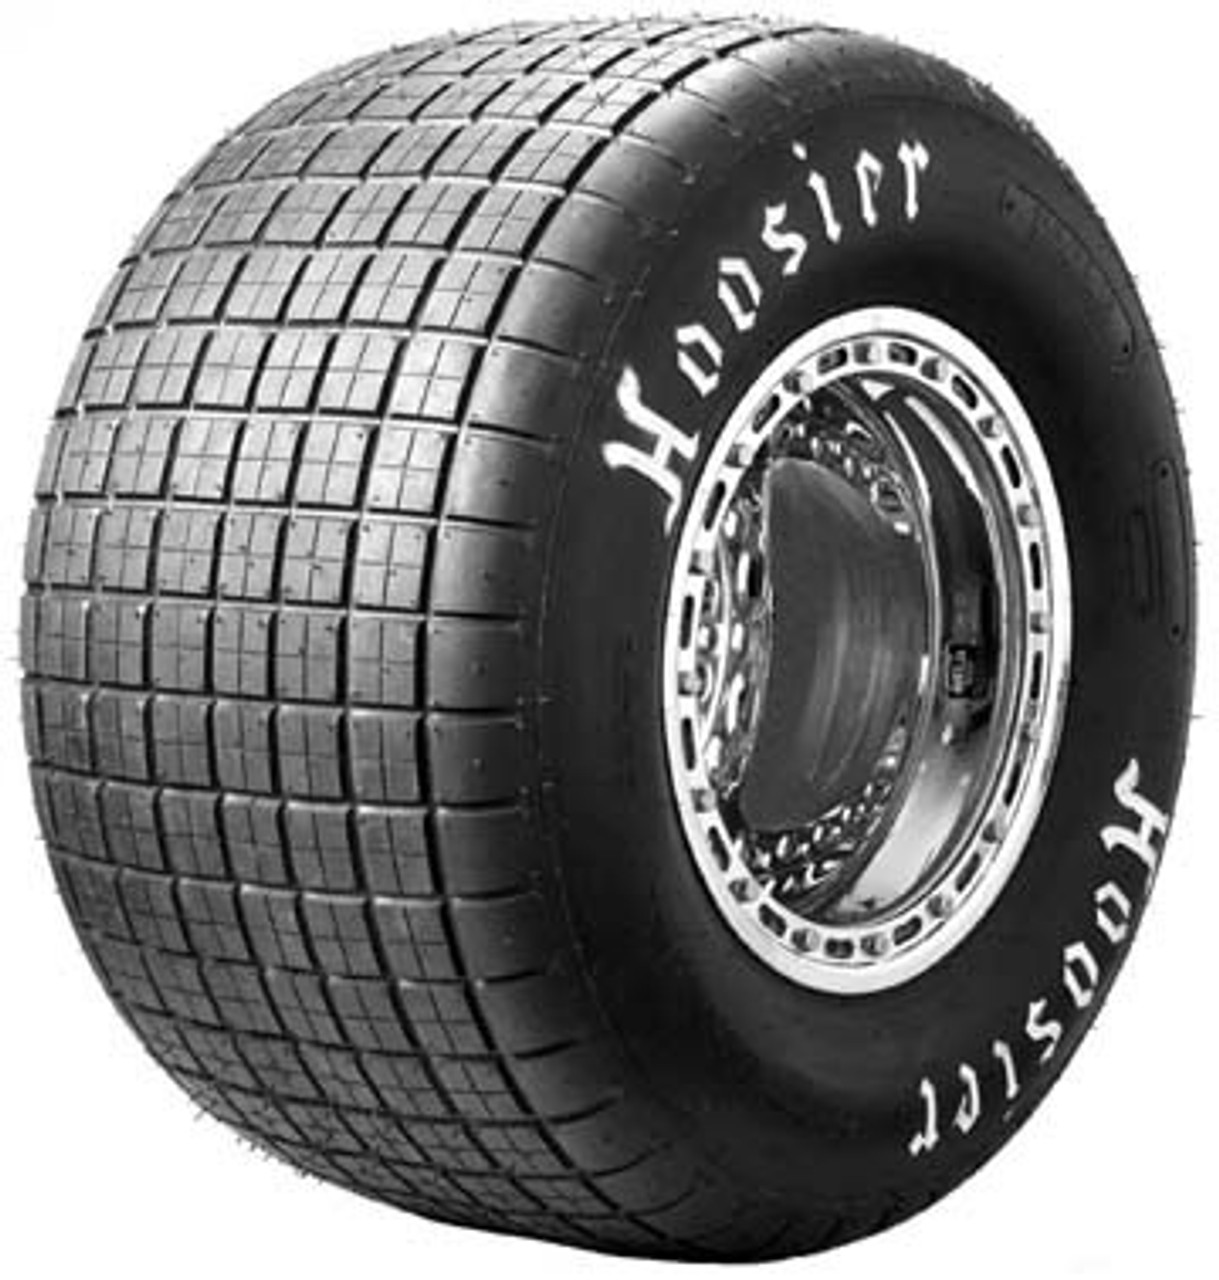 Hoosier Late Model Dirt Tire